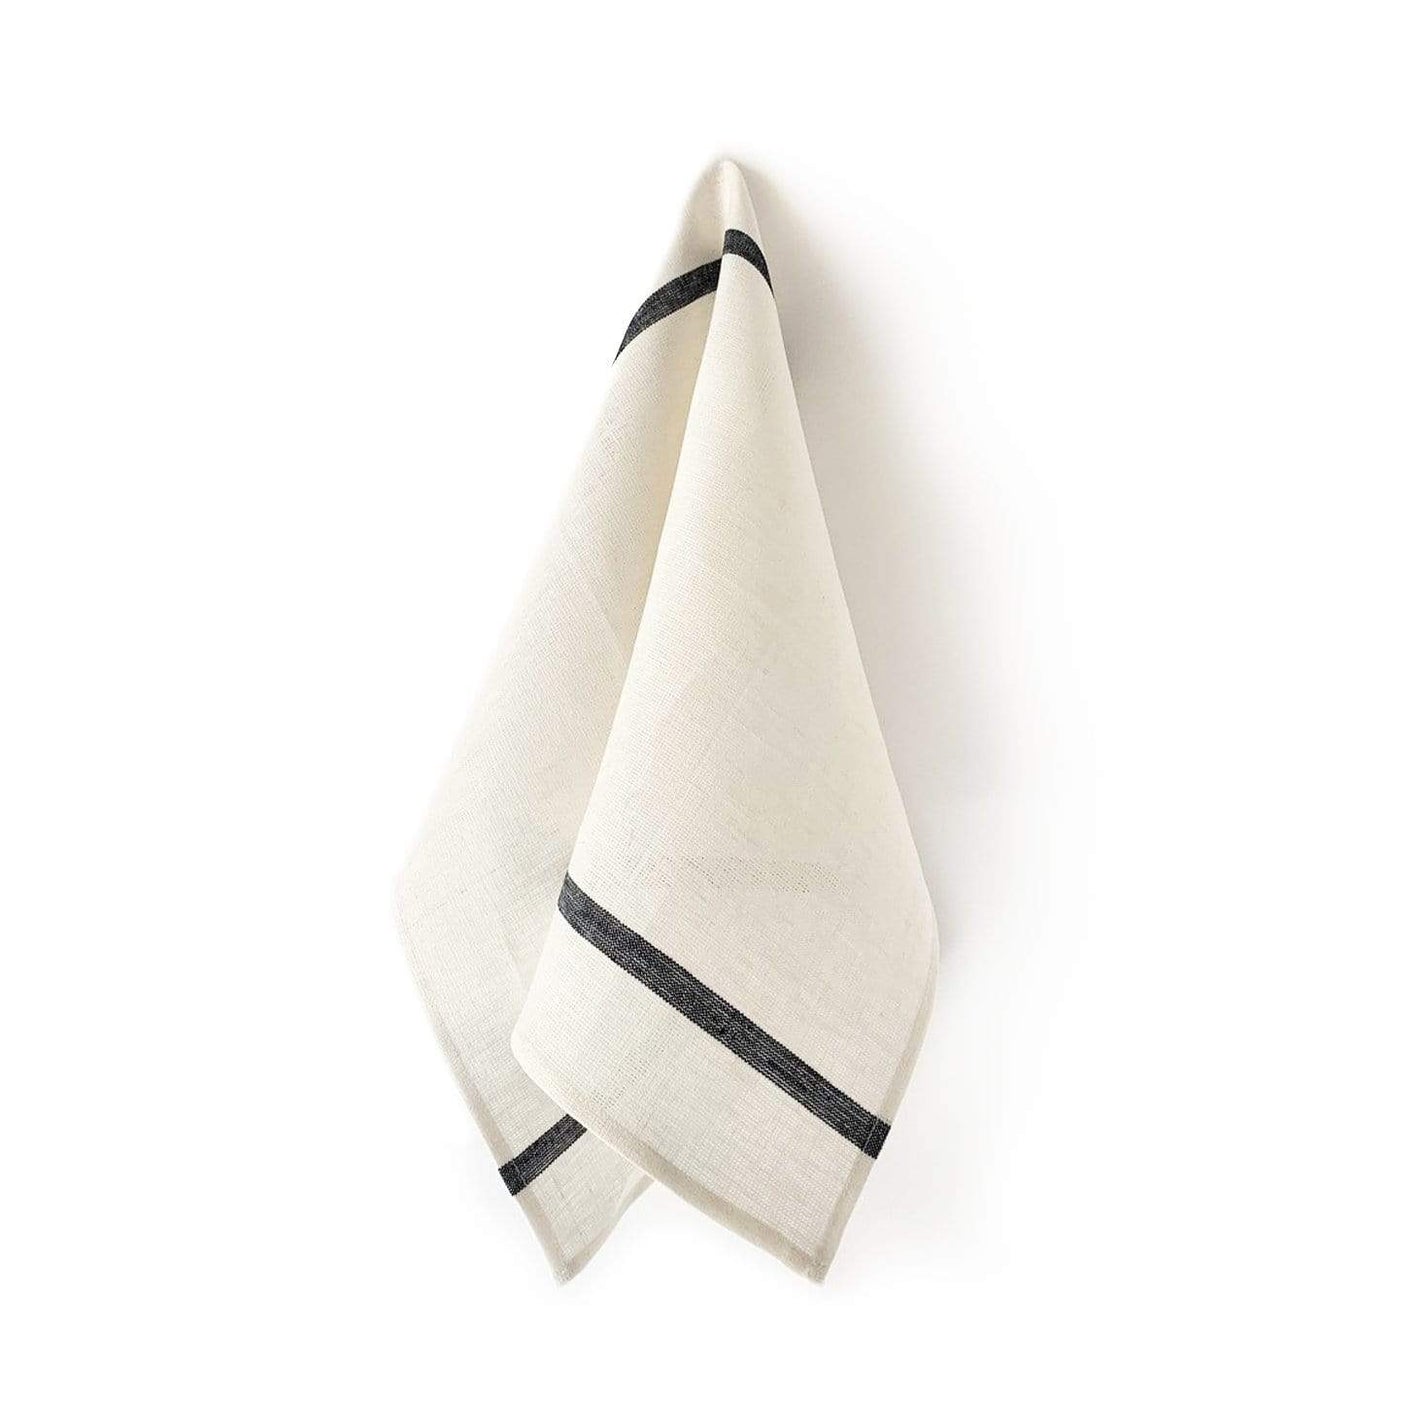 Fog Linen Work Tea Towel - White with Navy Stripe